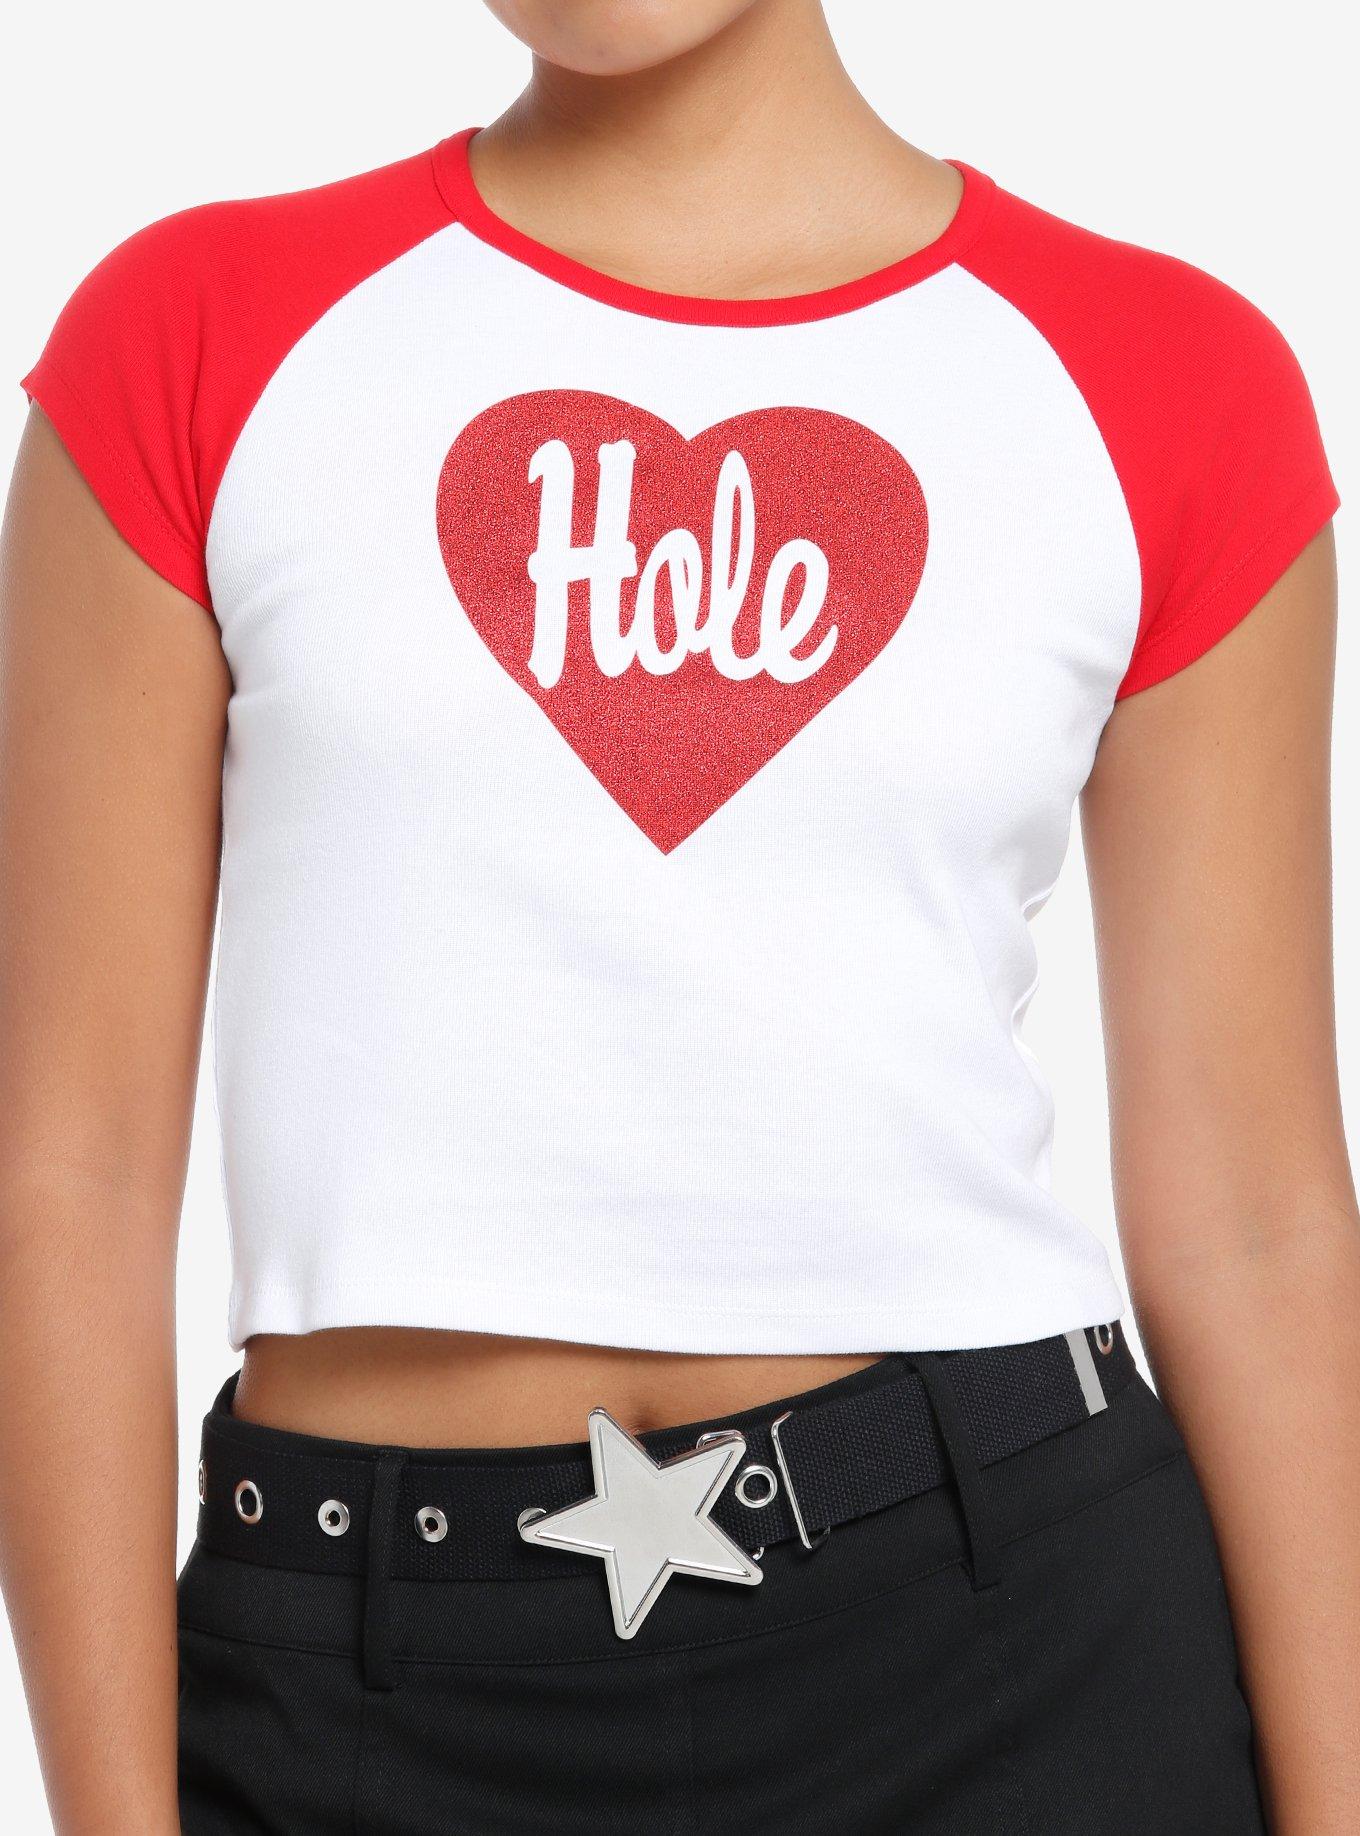 Hole Glitter Heart Girls Baby Raglan T-Shirt